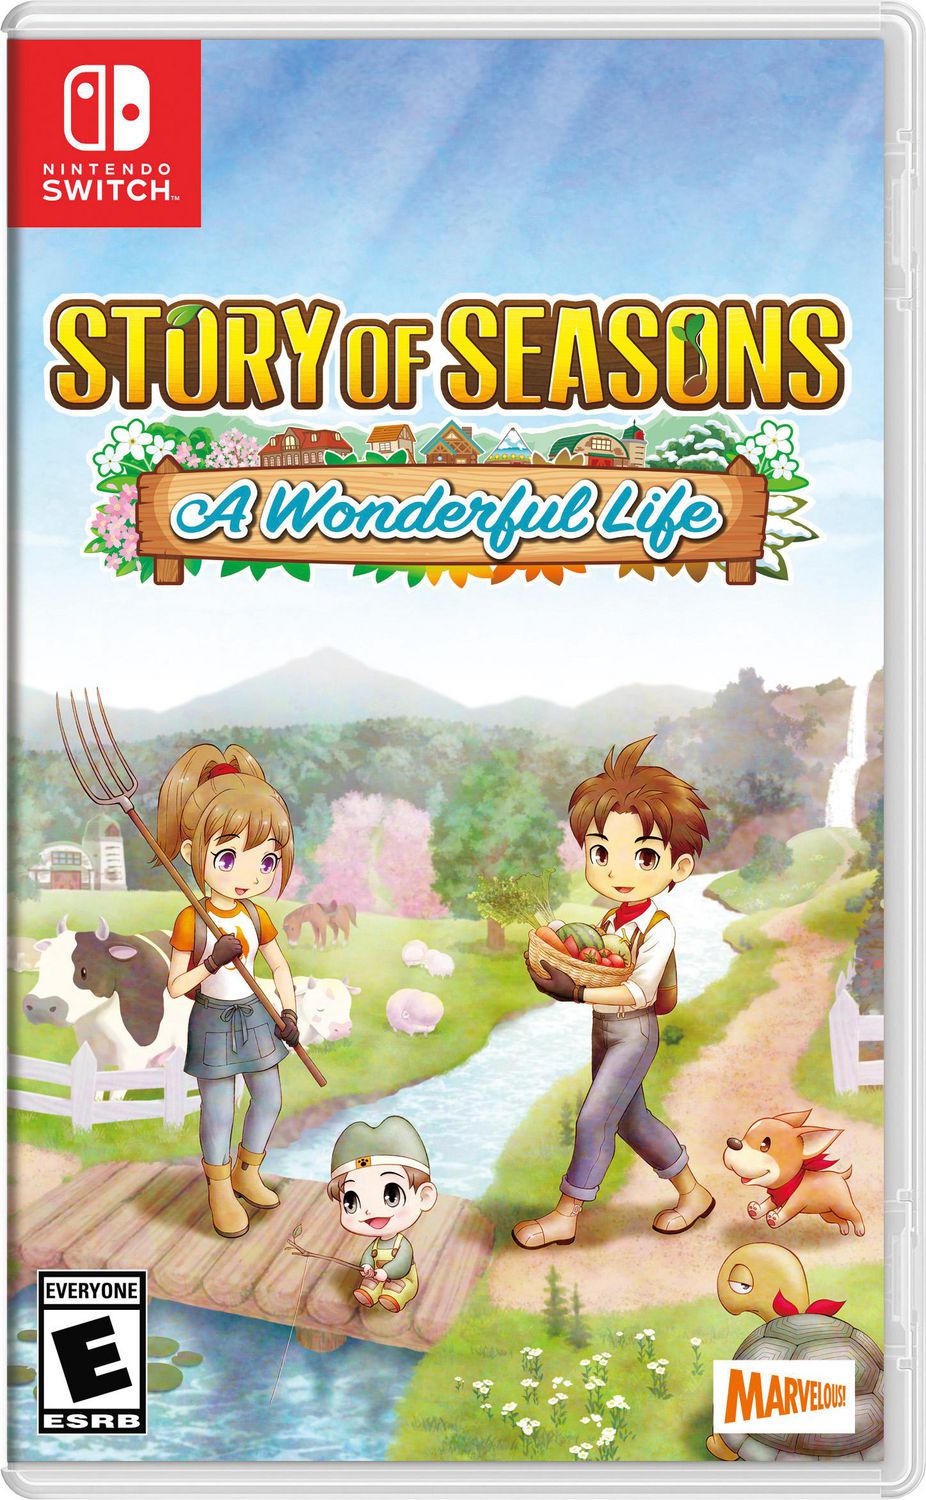 Life　Seasons　Story　Only　Version　of　(Nintendo　Switch)　A　Wonderful　English